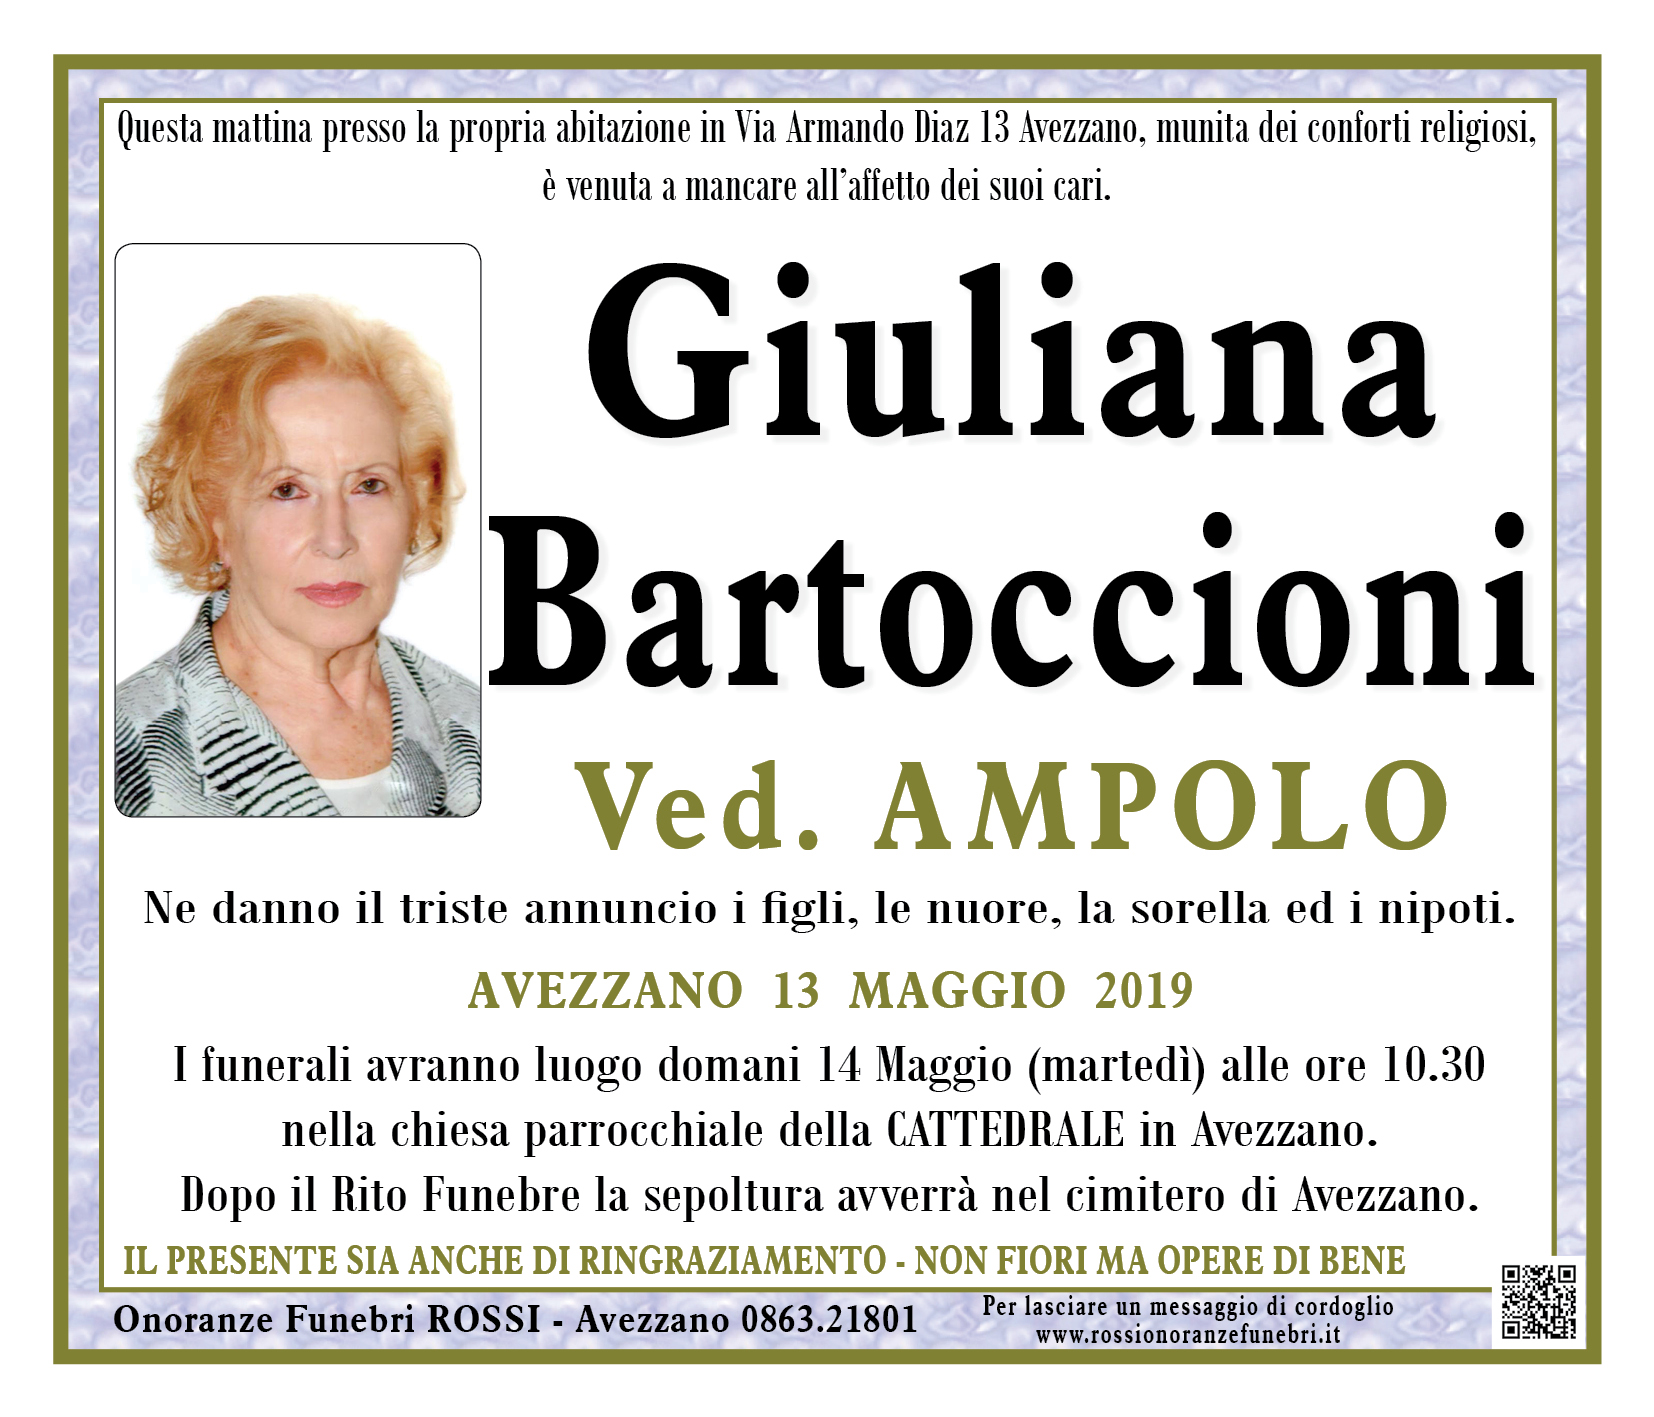 Giuliana Bartoccioni